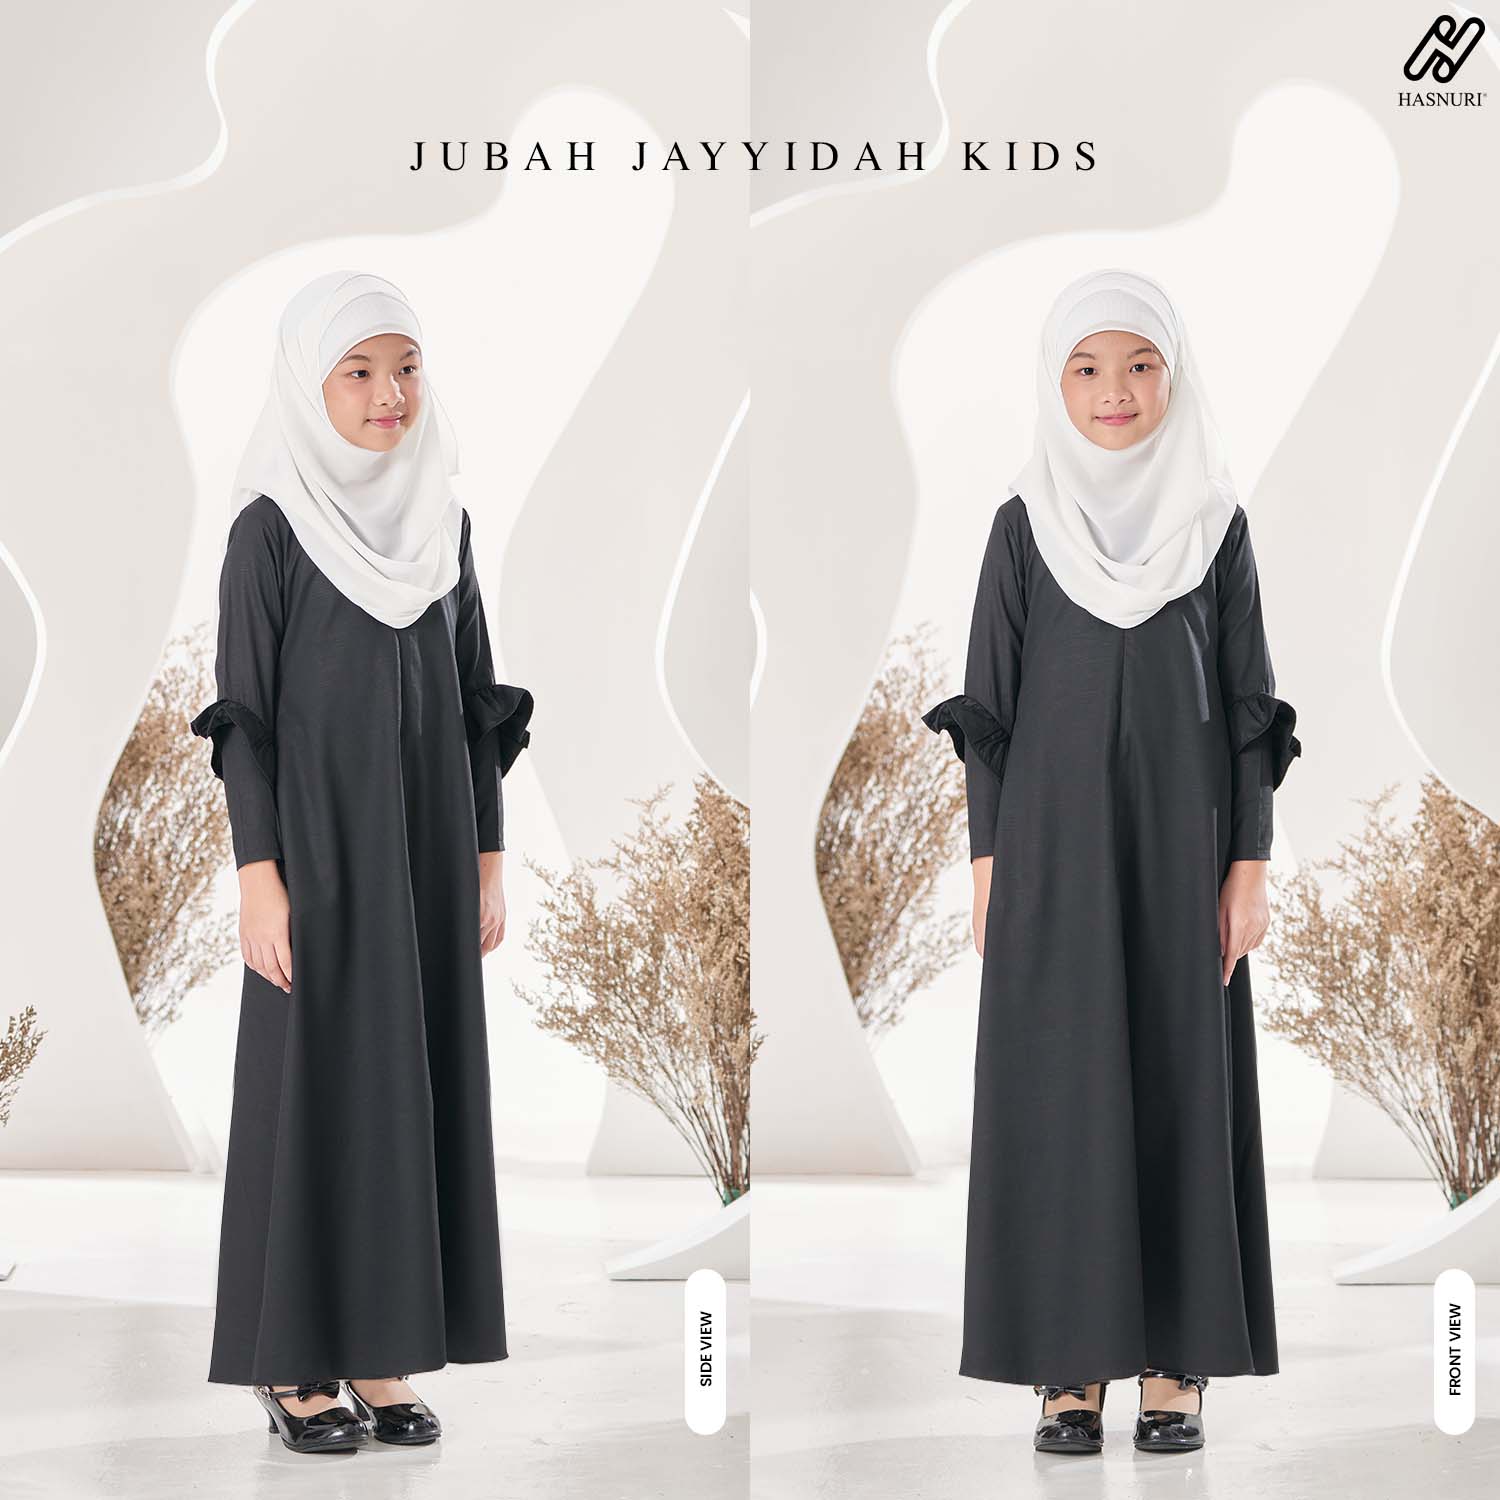 Jubah Jayyidah Kids - Spruce Grey